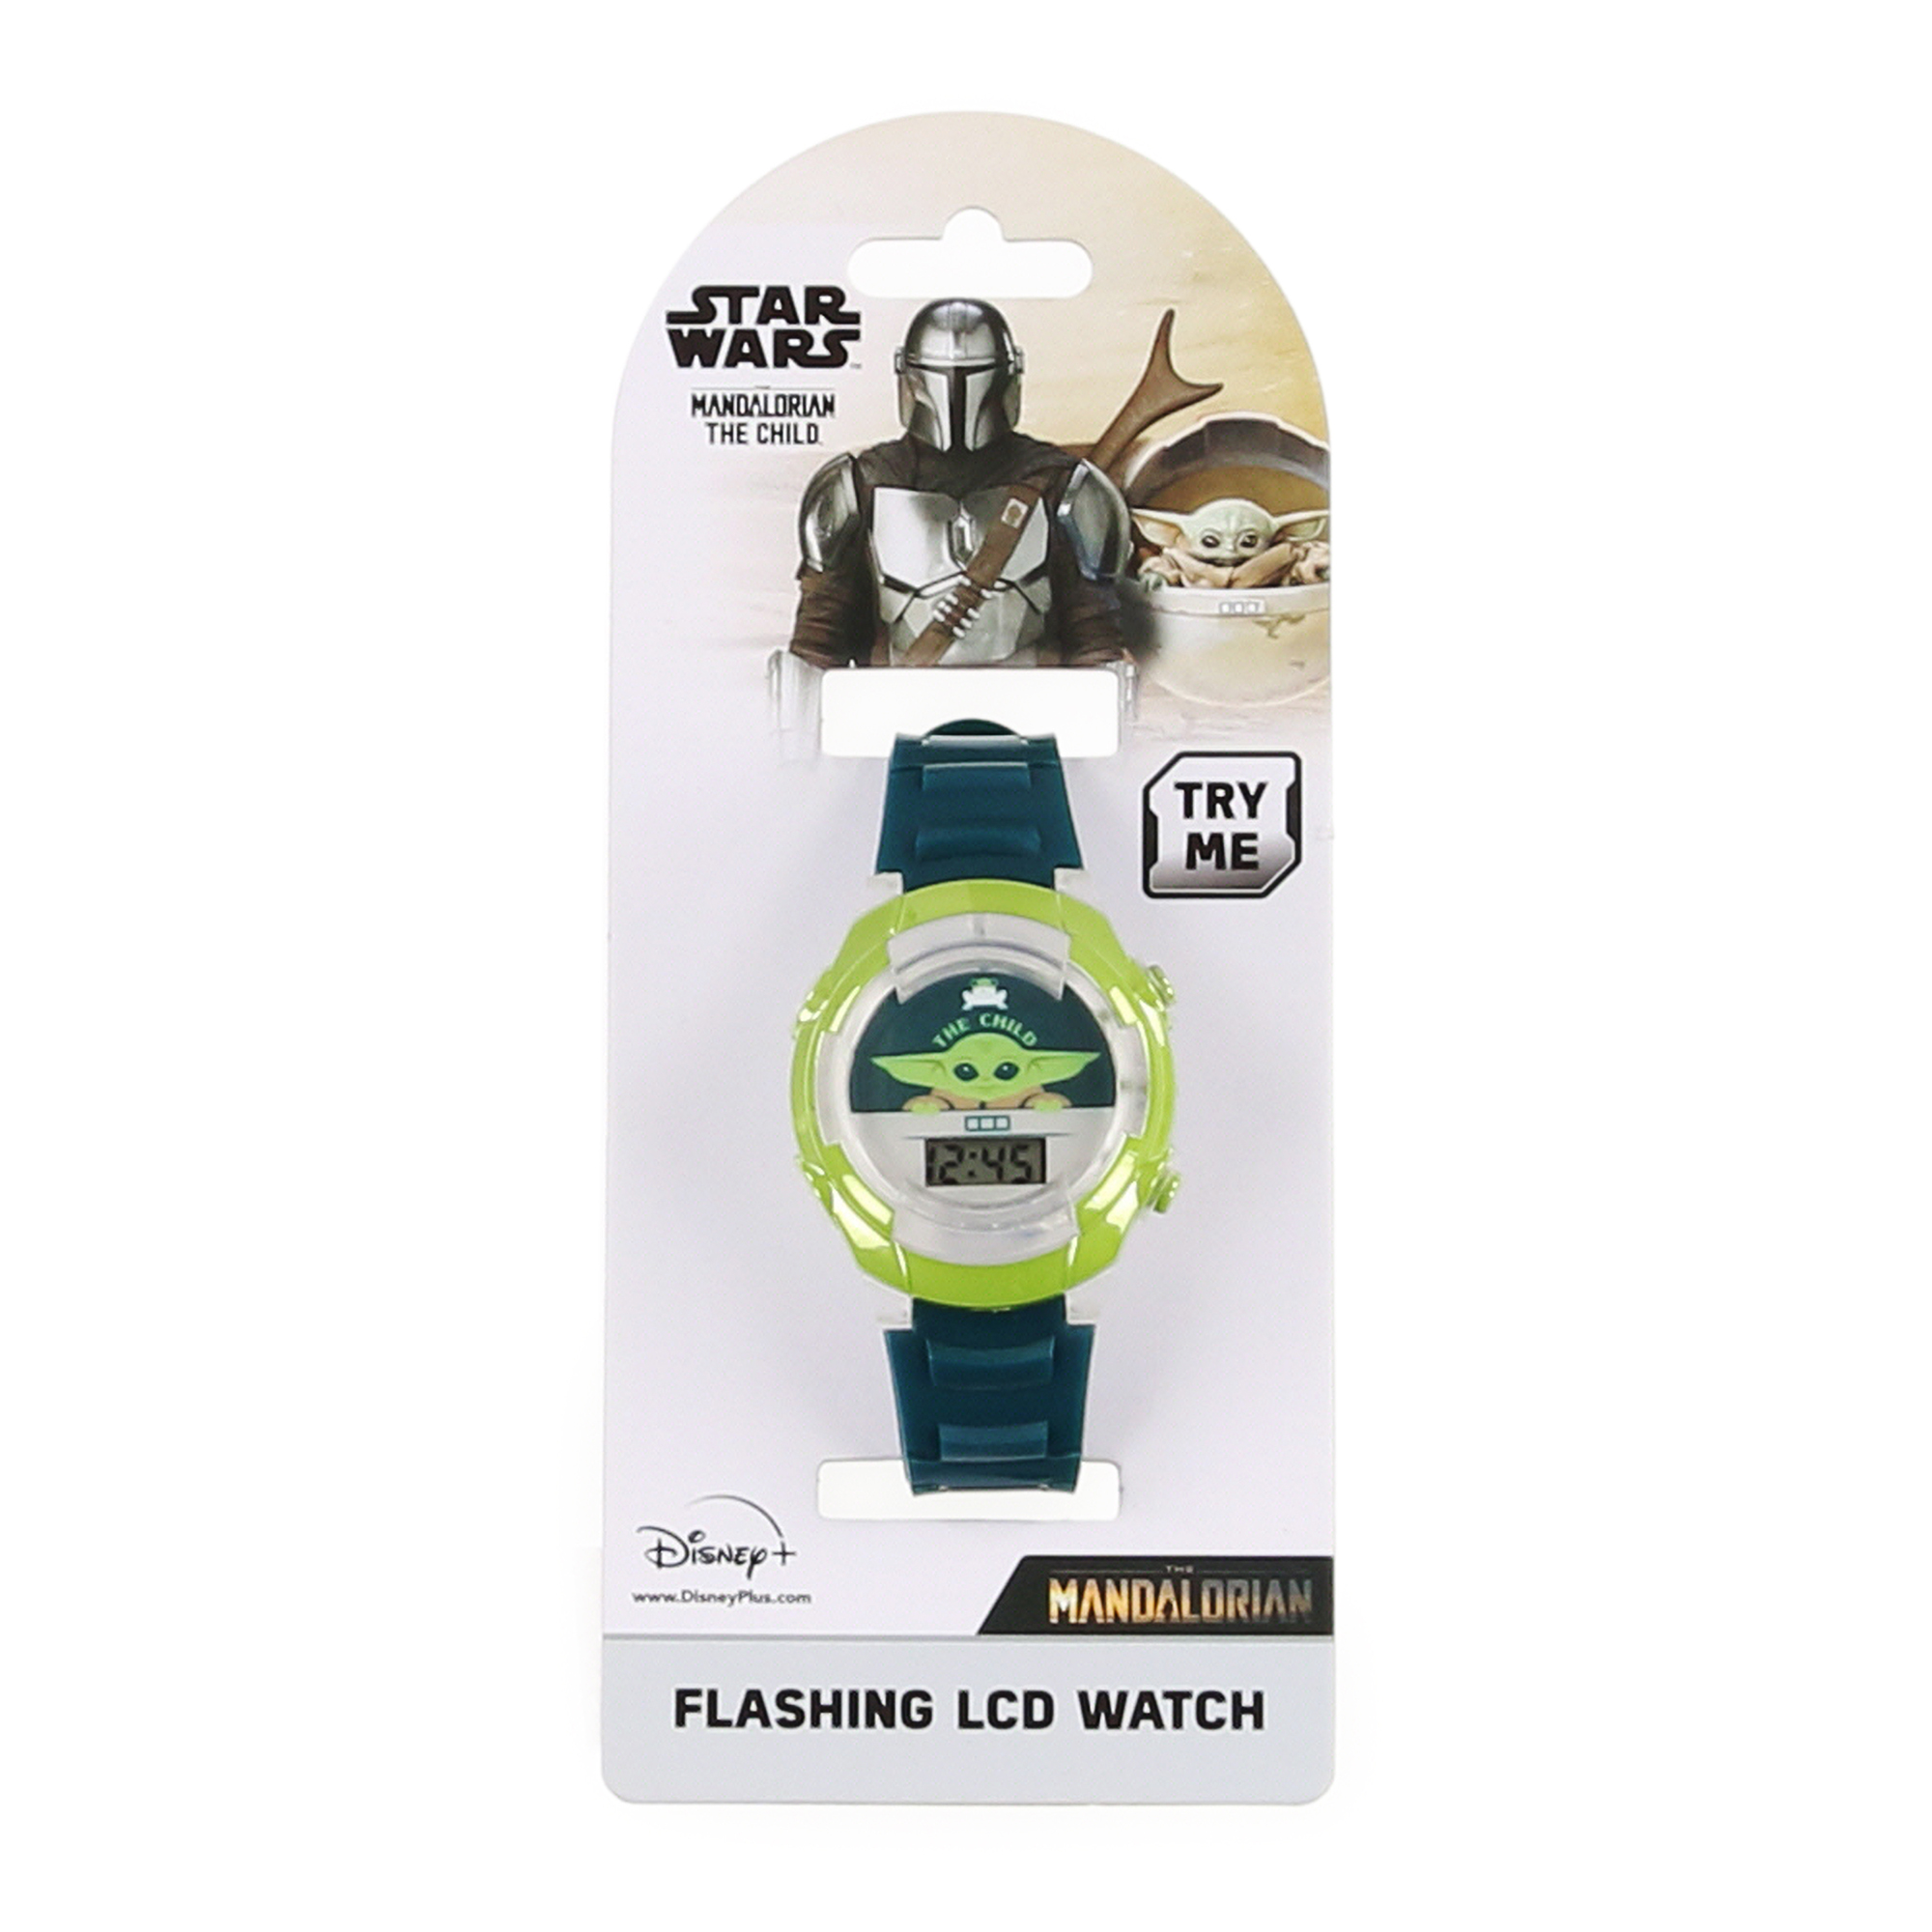 Star Wars The Mandalorian™ The Child Flashing Lcd Watch